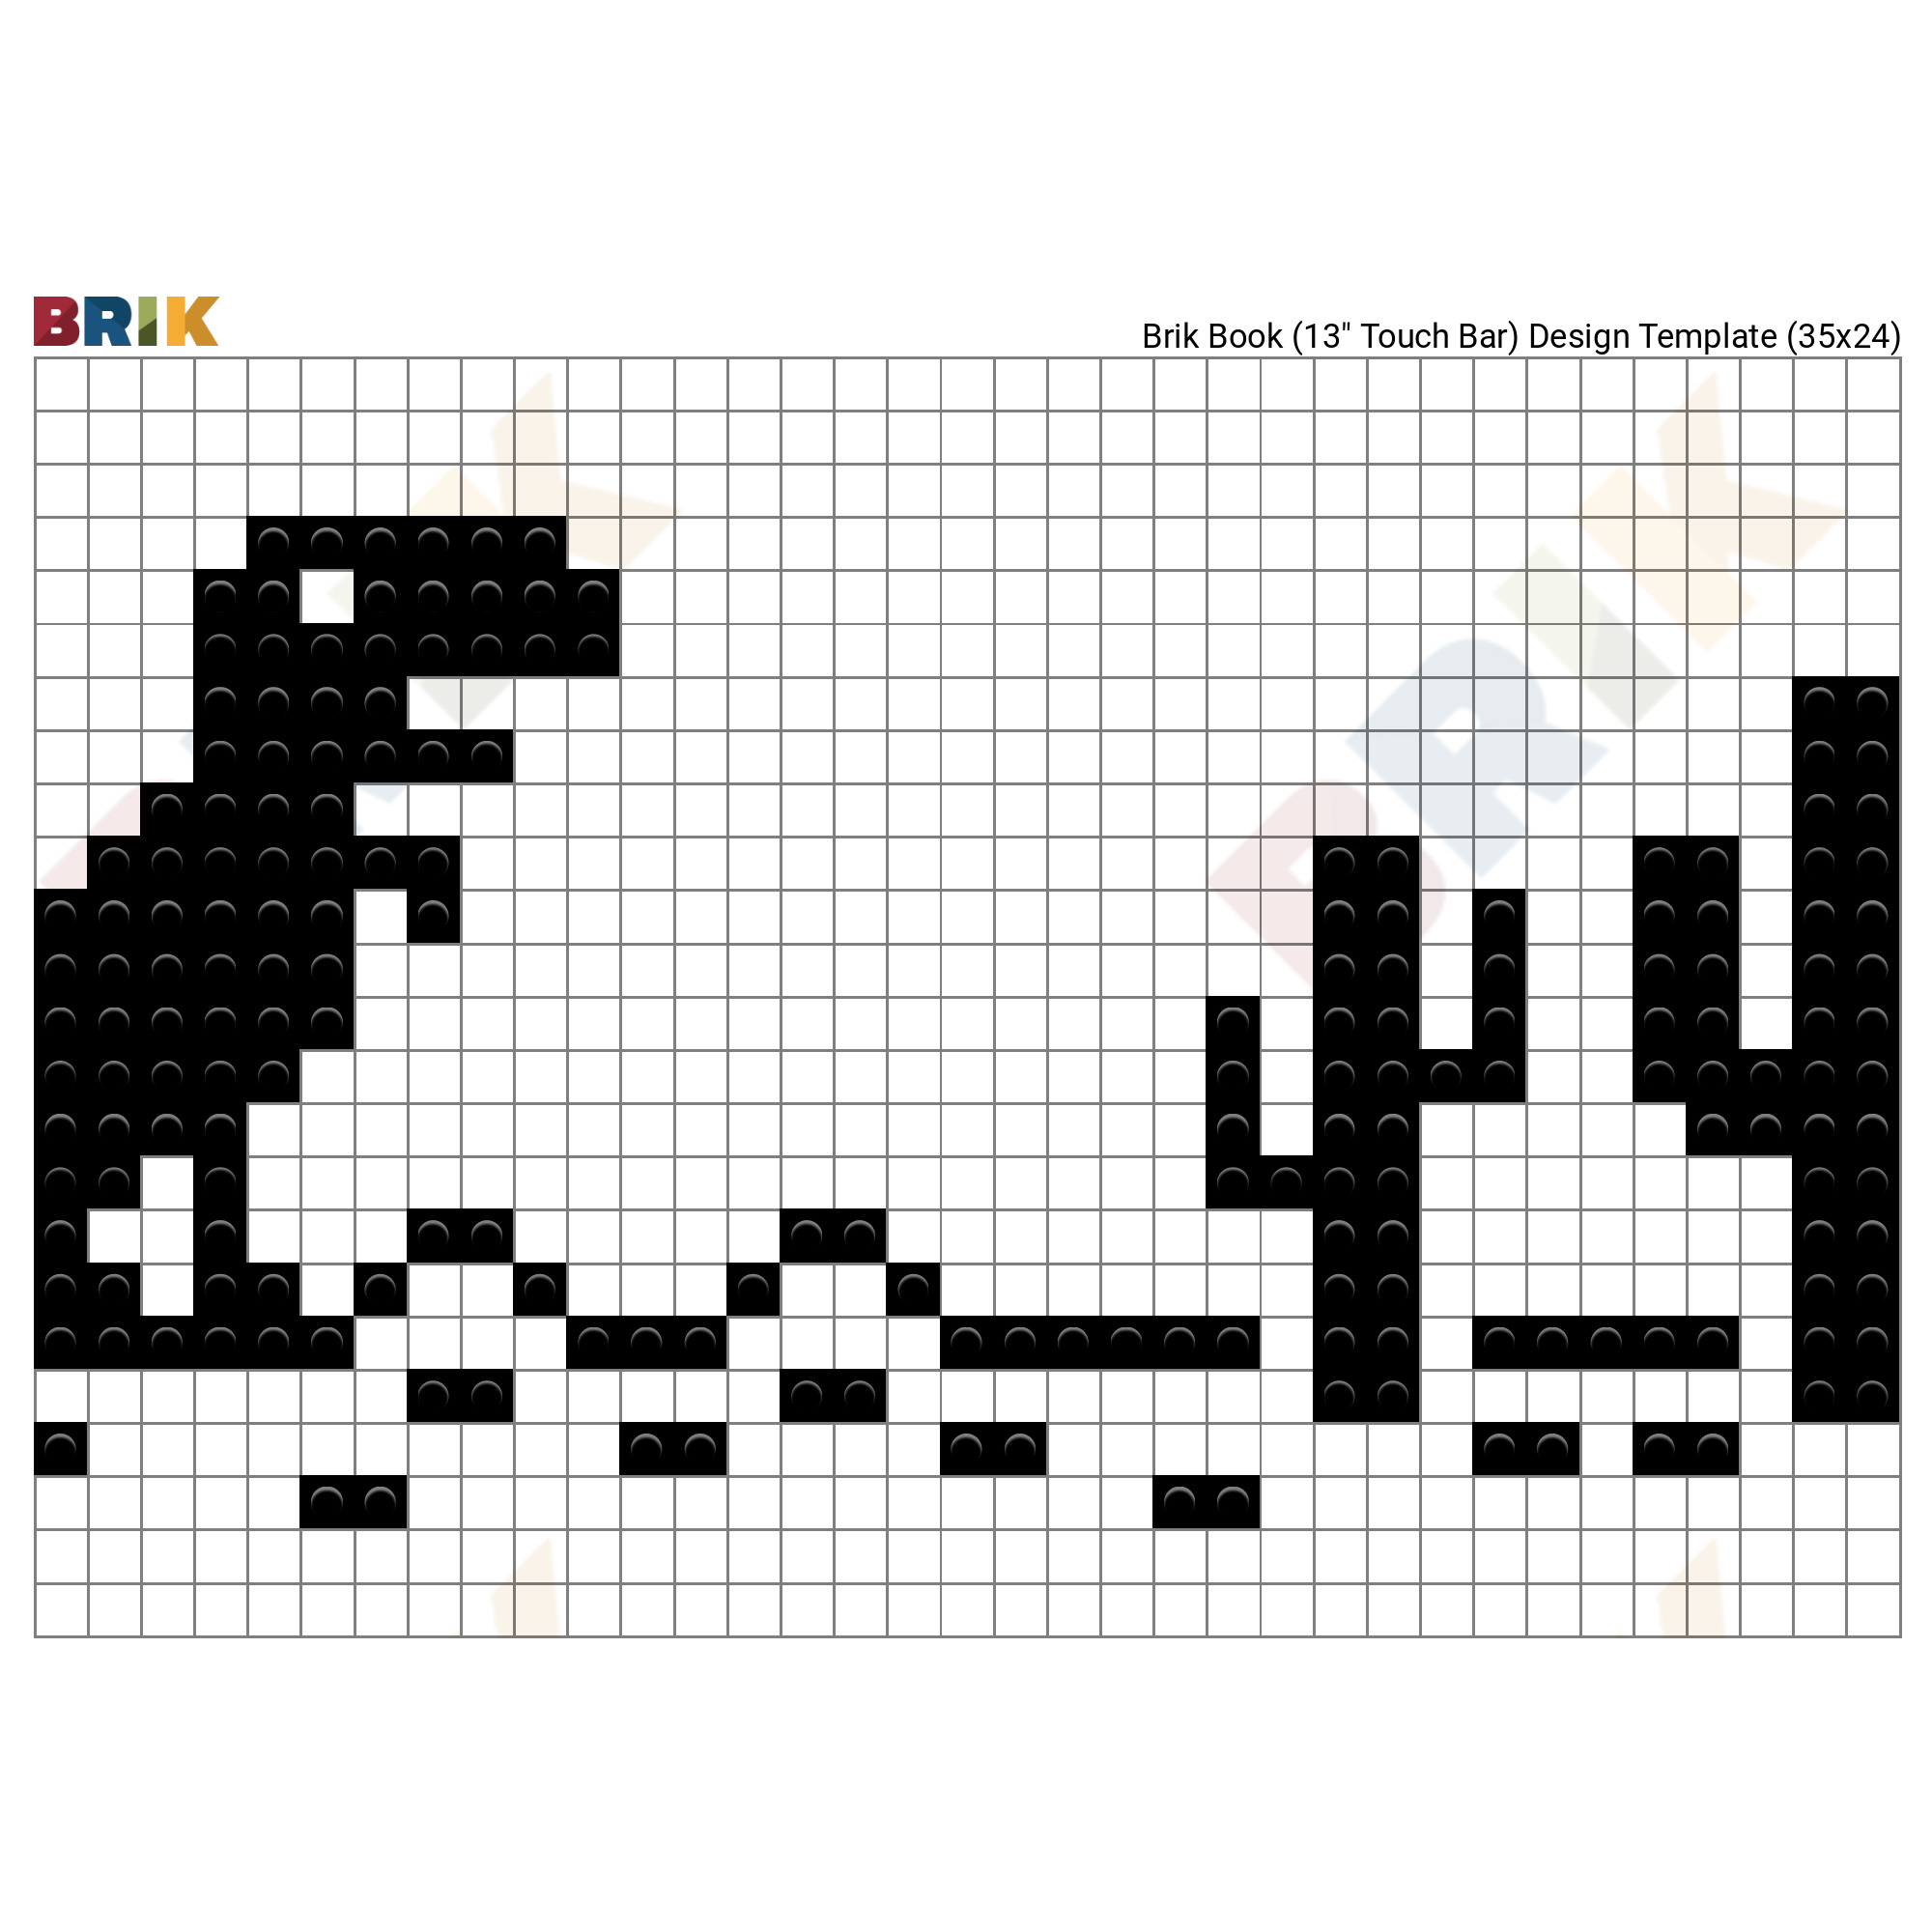 Chrome dino game pixel art